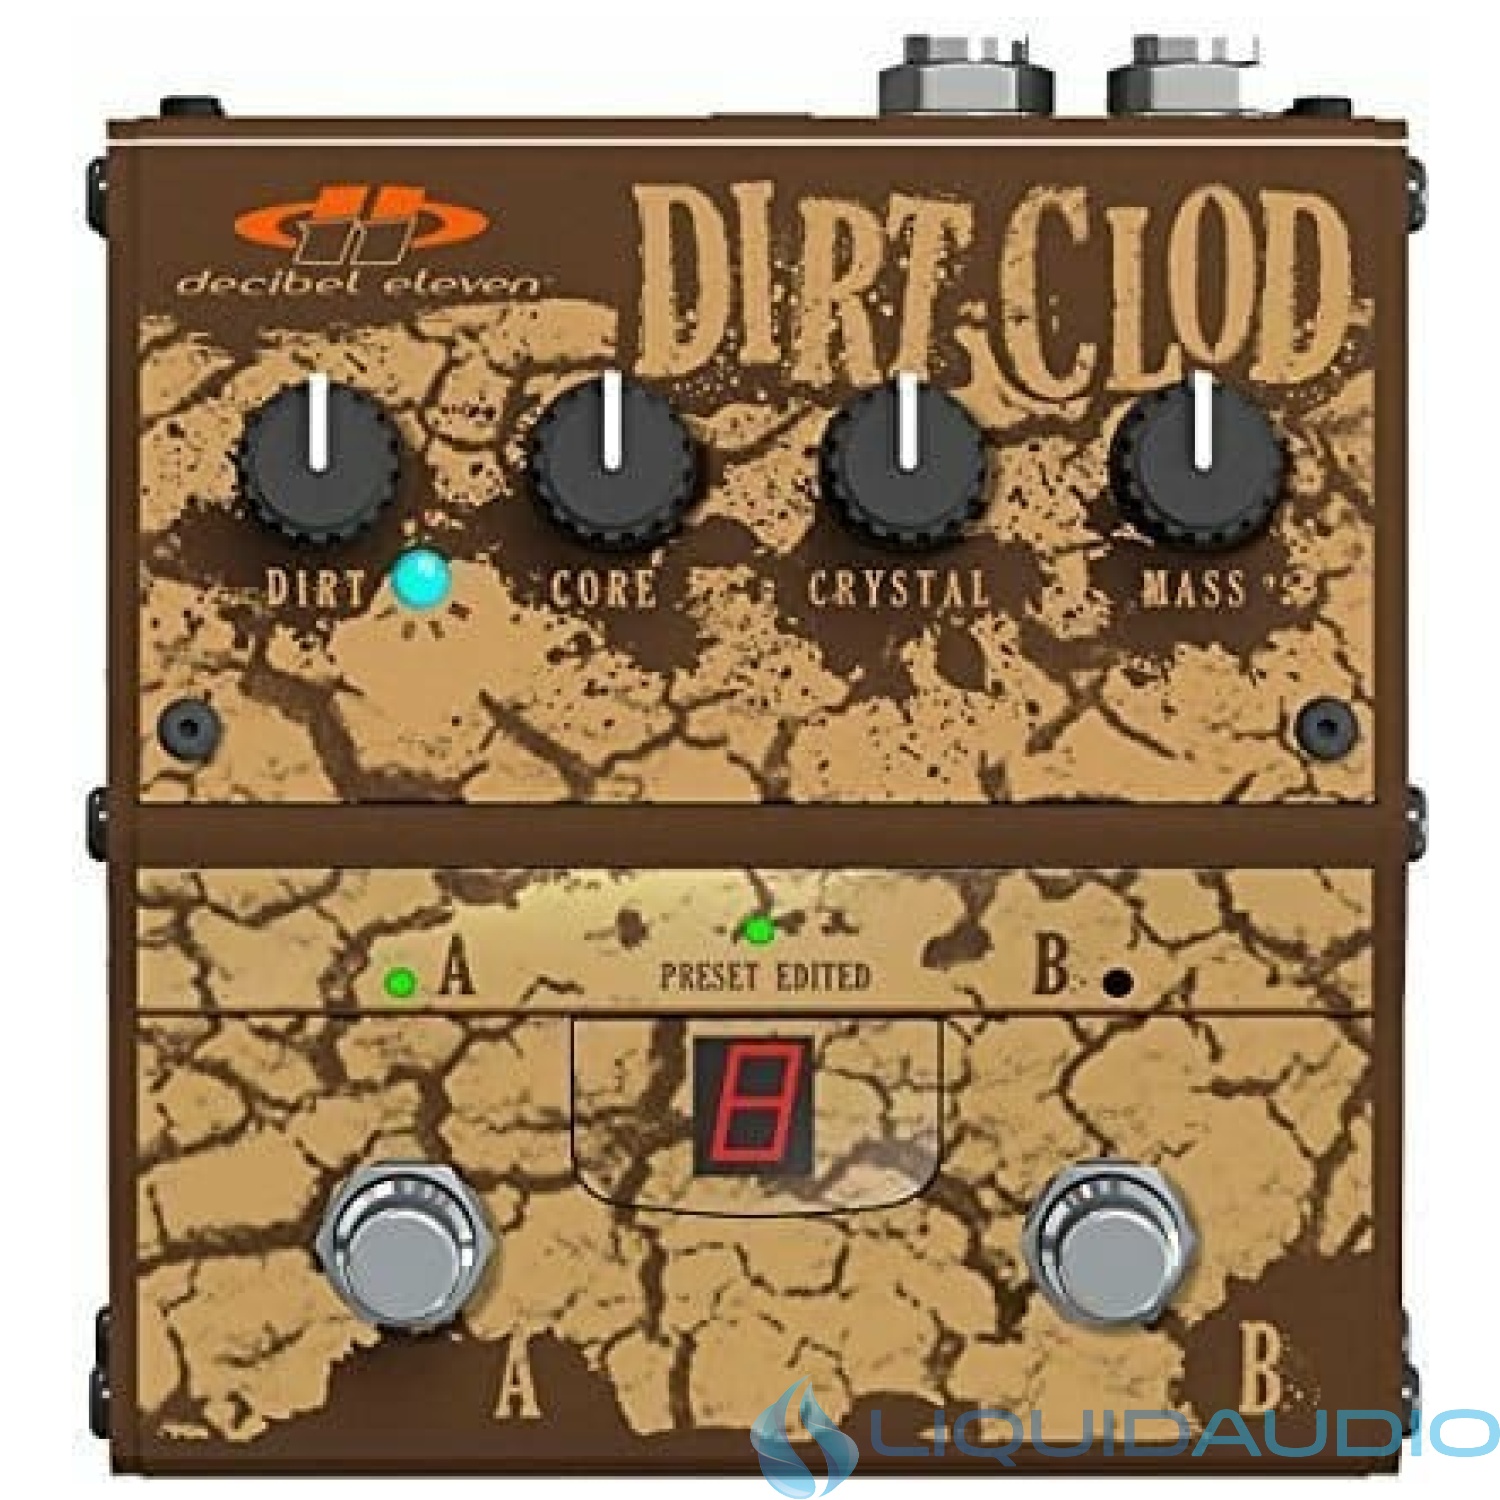 Decibel Eleven Dirt Clod Analog Overdrive-Distortion Guitar Effects Pedal